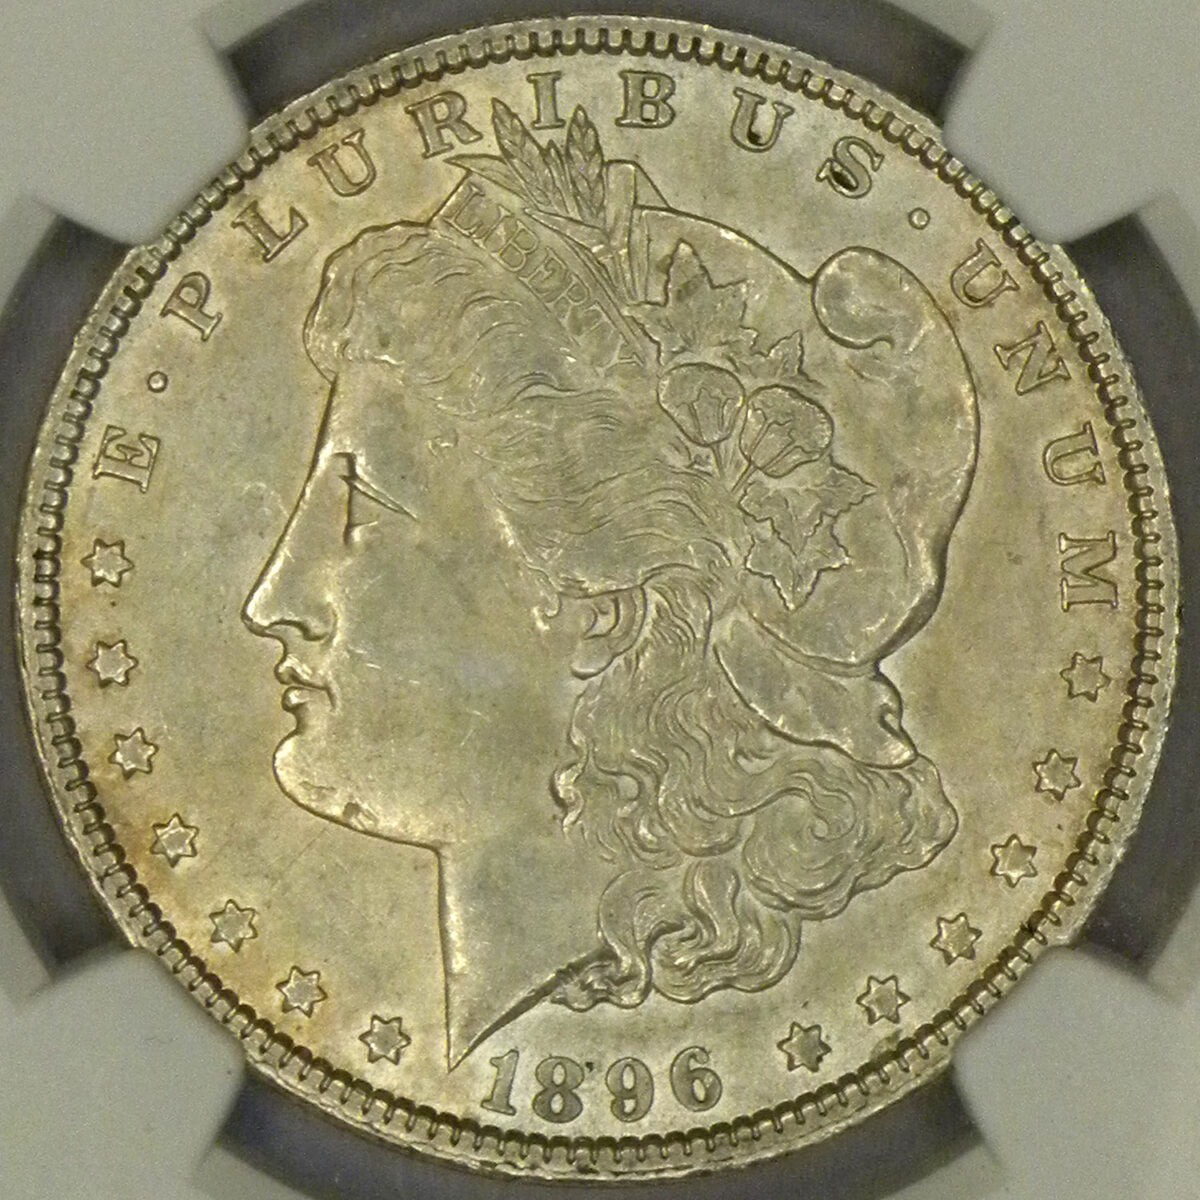 1896 Morgan Dollar (obverse)